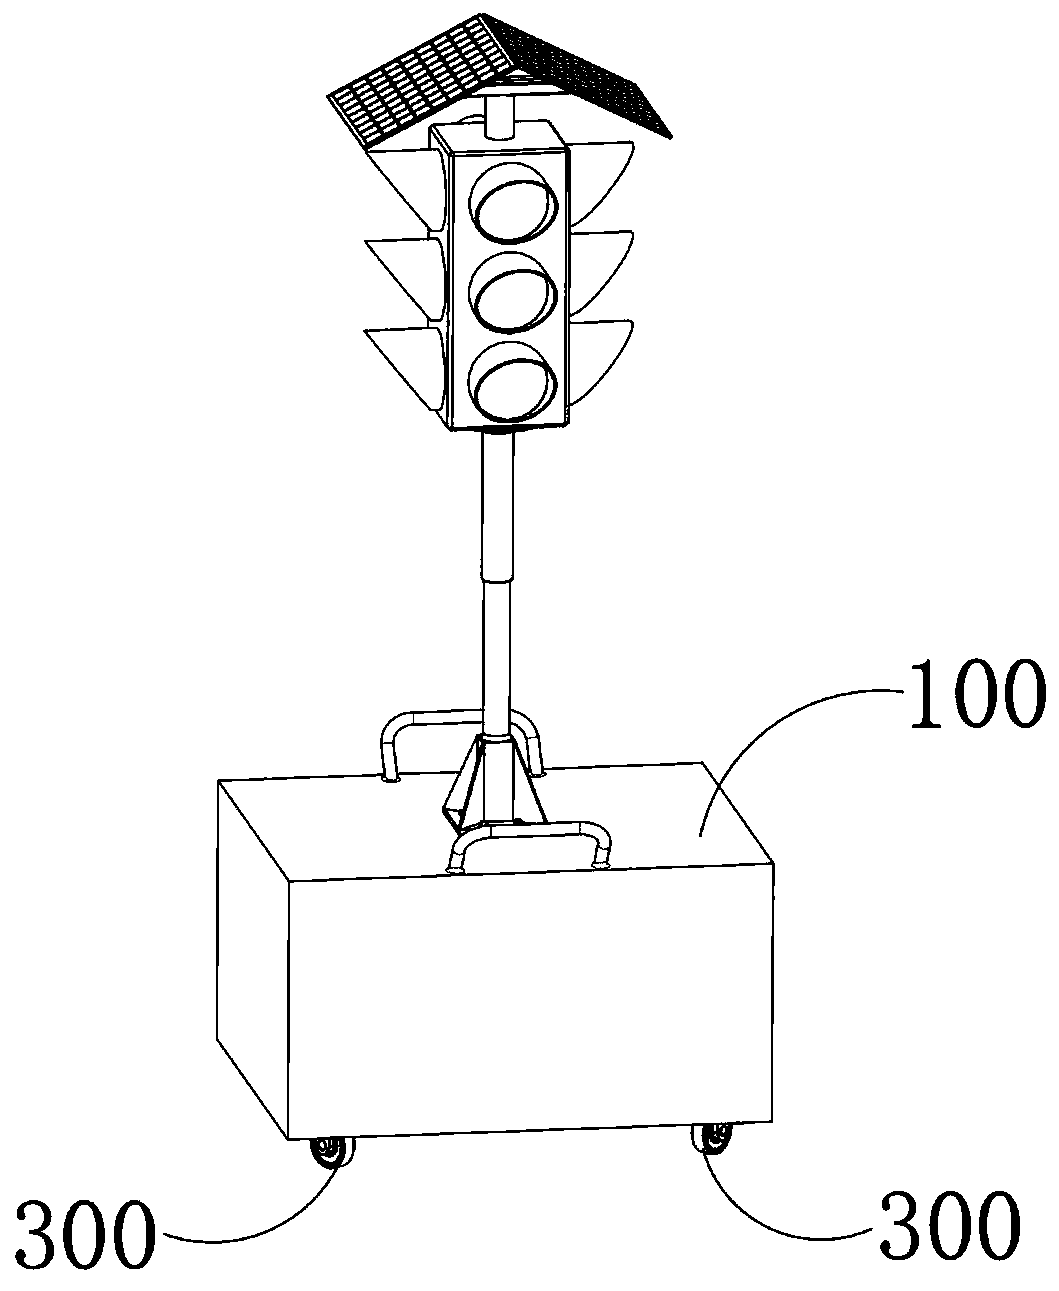 Directional deflection self-locking method for universal wheels of mobile traffic signal lamp